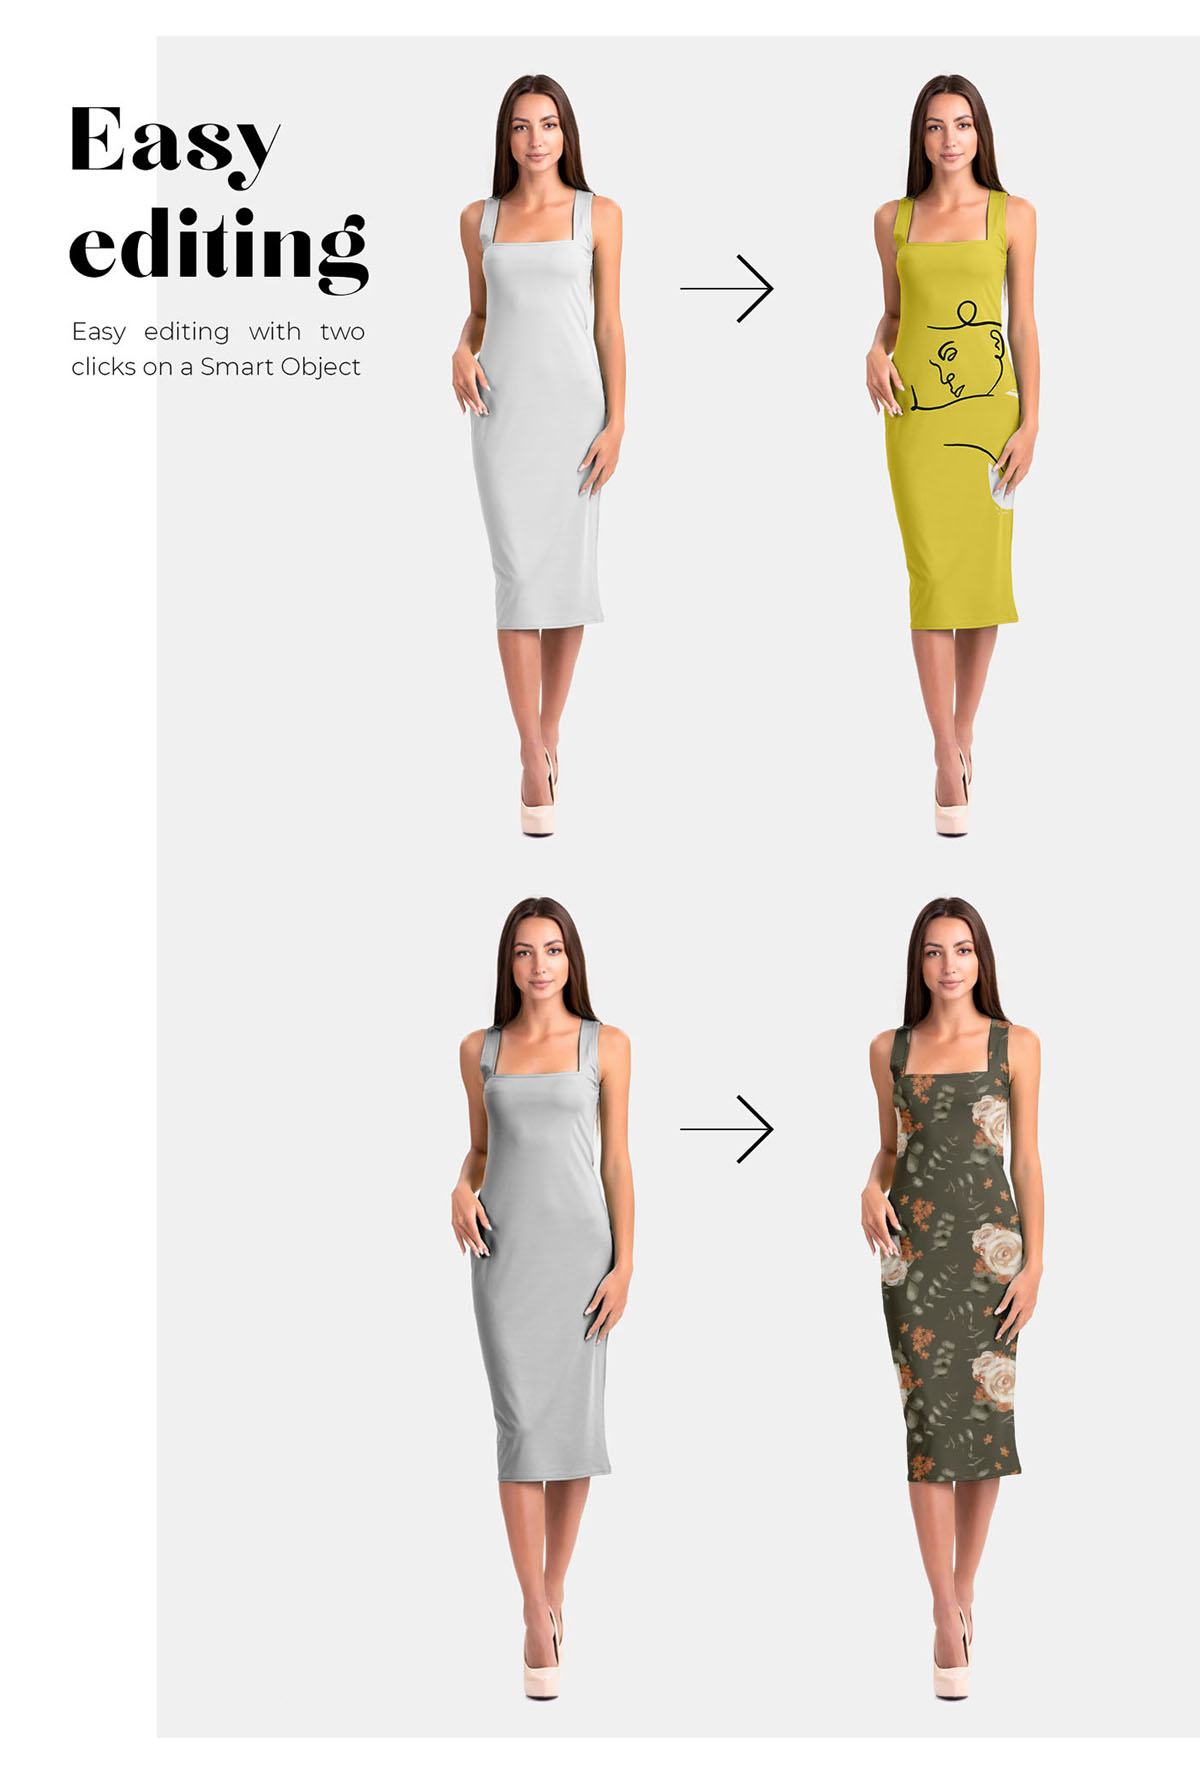 Free Elegant Dress Mockup - Find the Perfect Creative ...